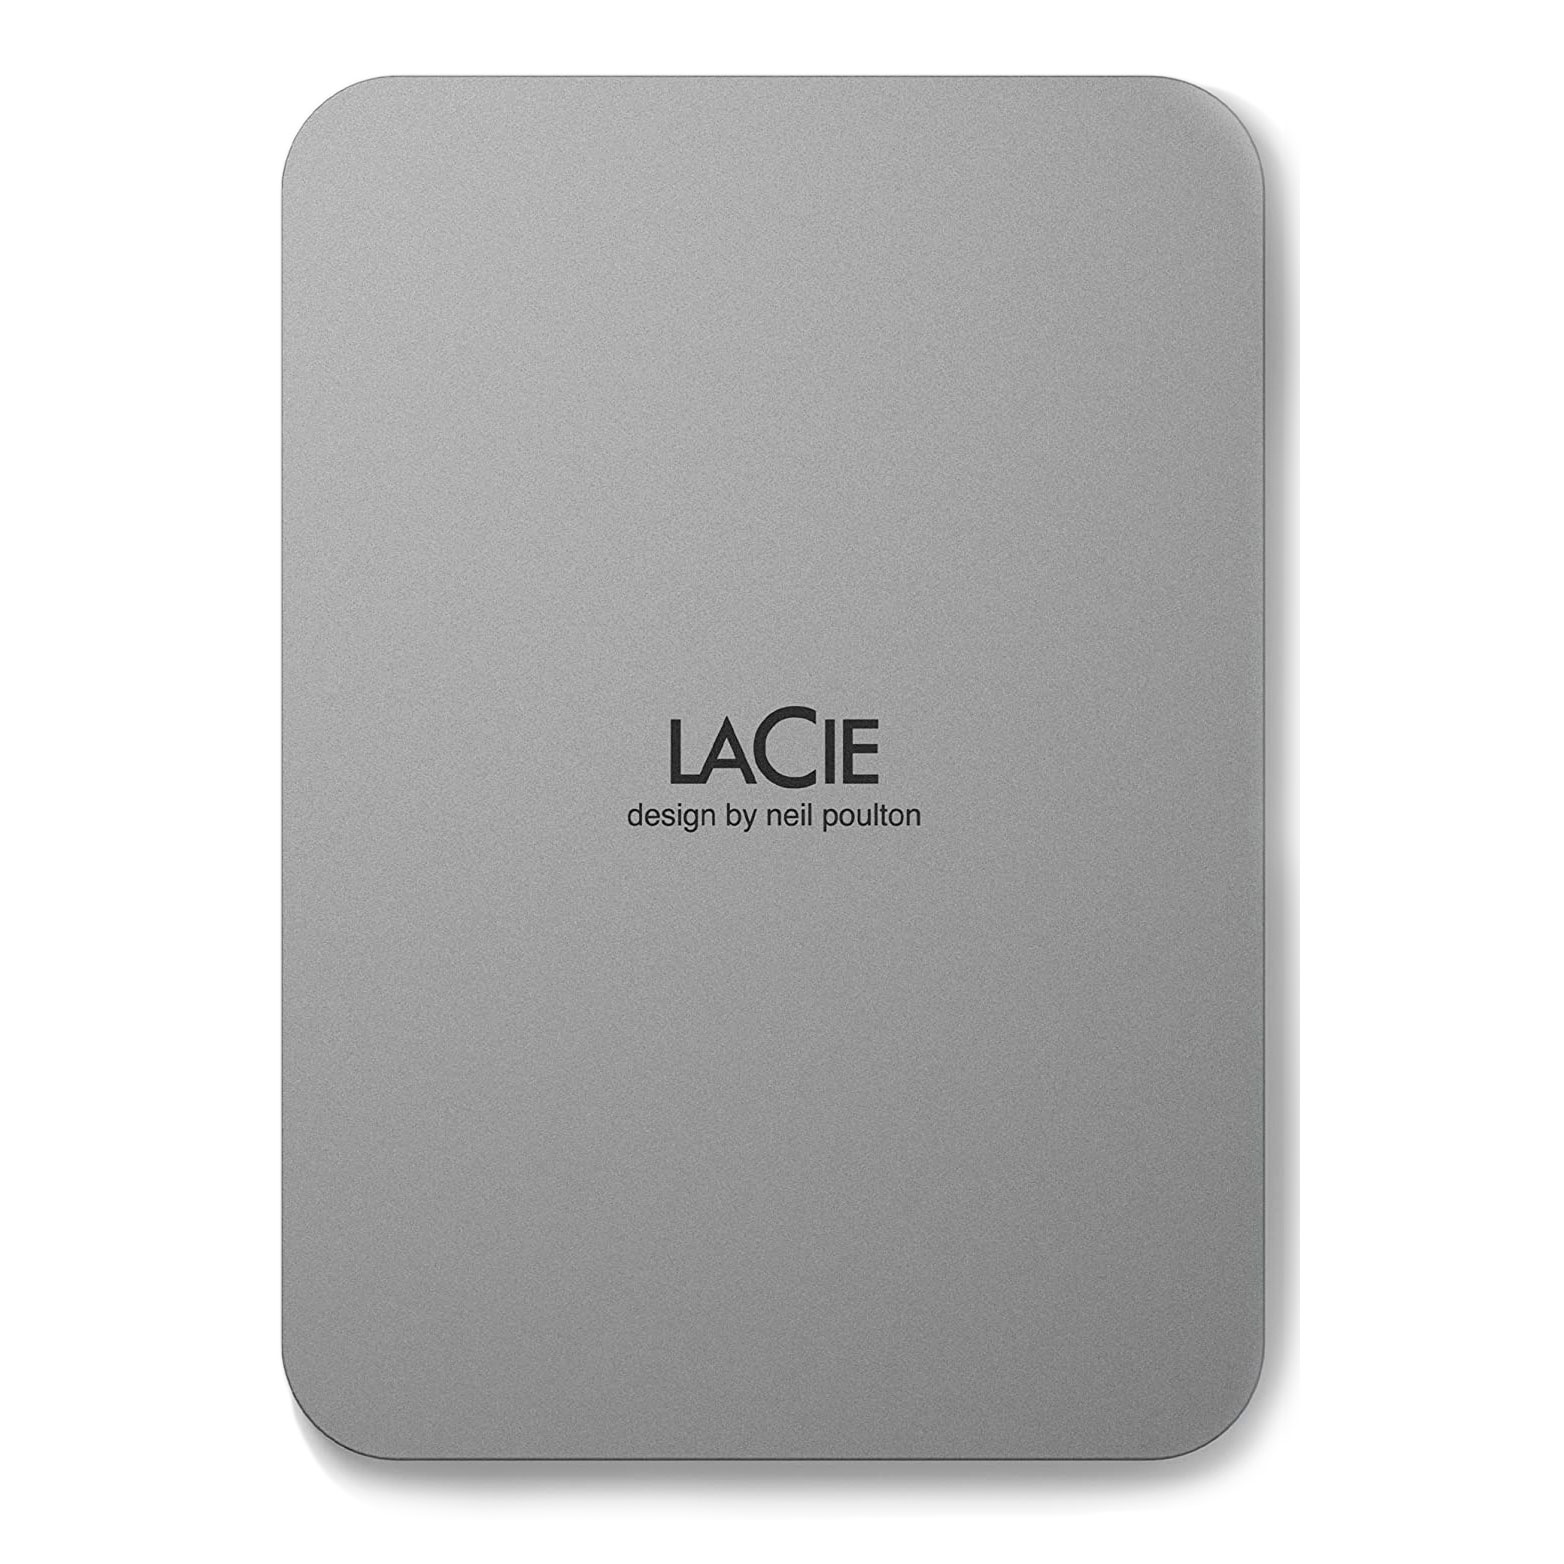 Внешний жесткий диск LaCie Mobile Drive, 2ТБ, серебристый